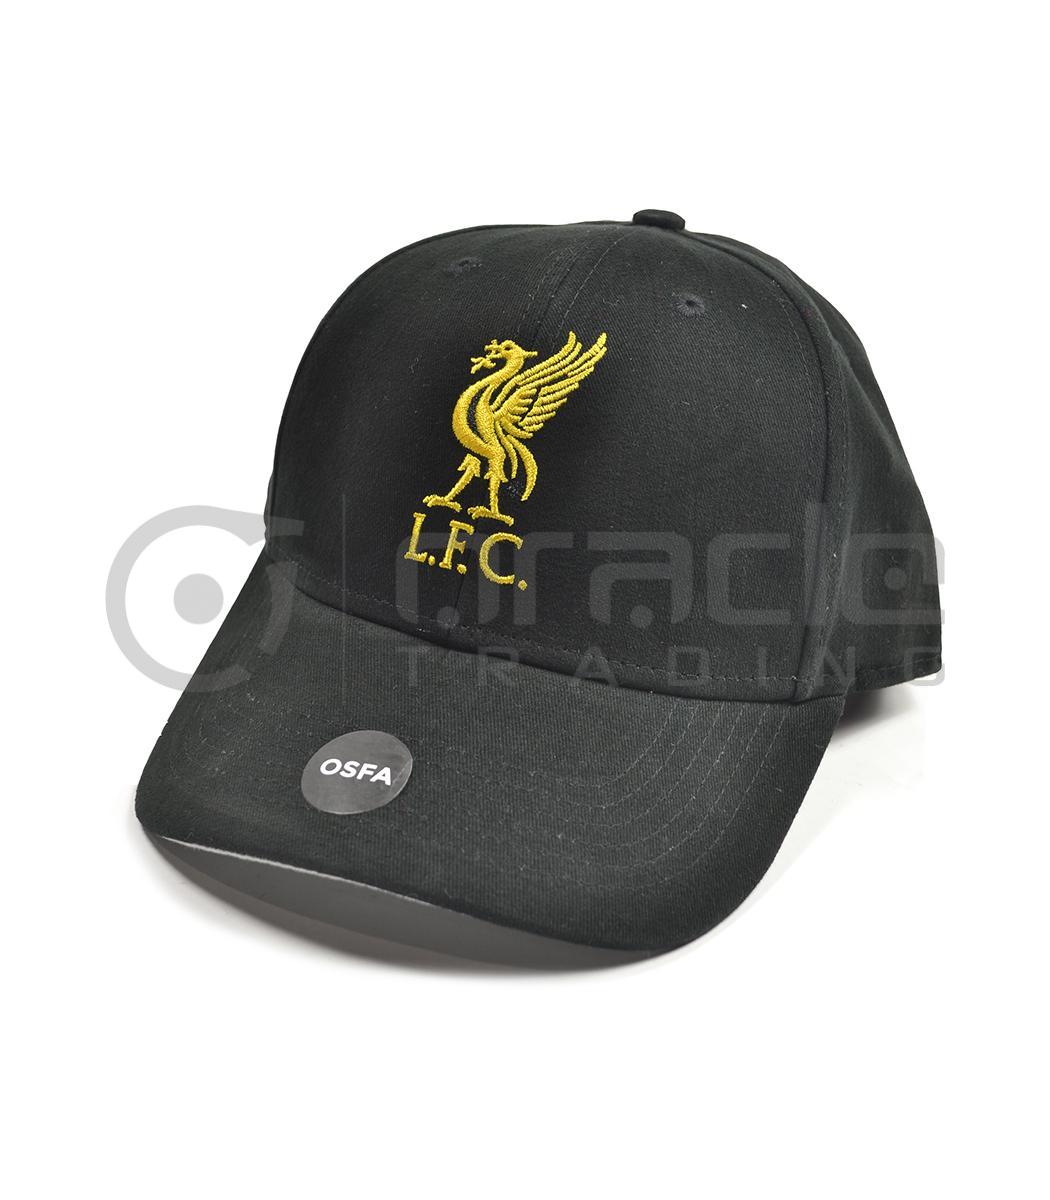 Liverpool Crest Hat - Black & Gold